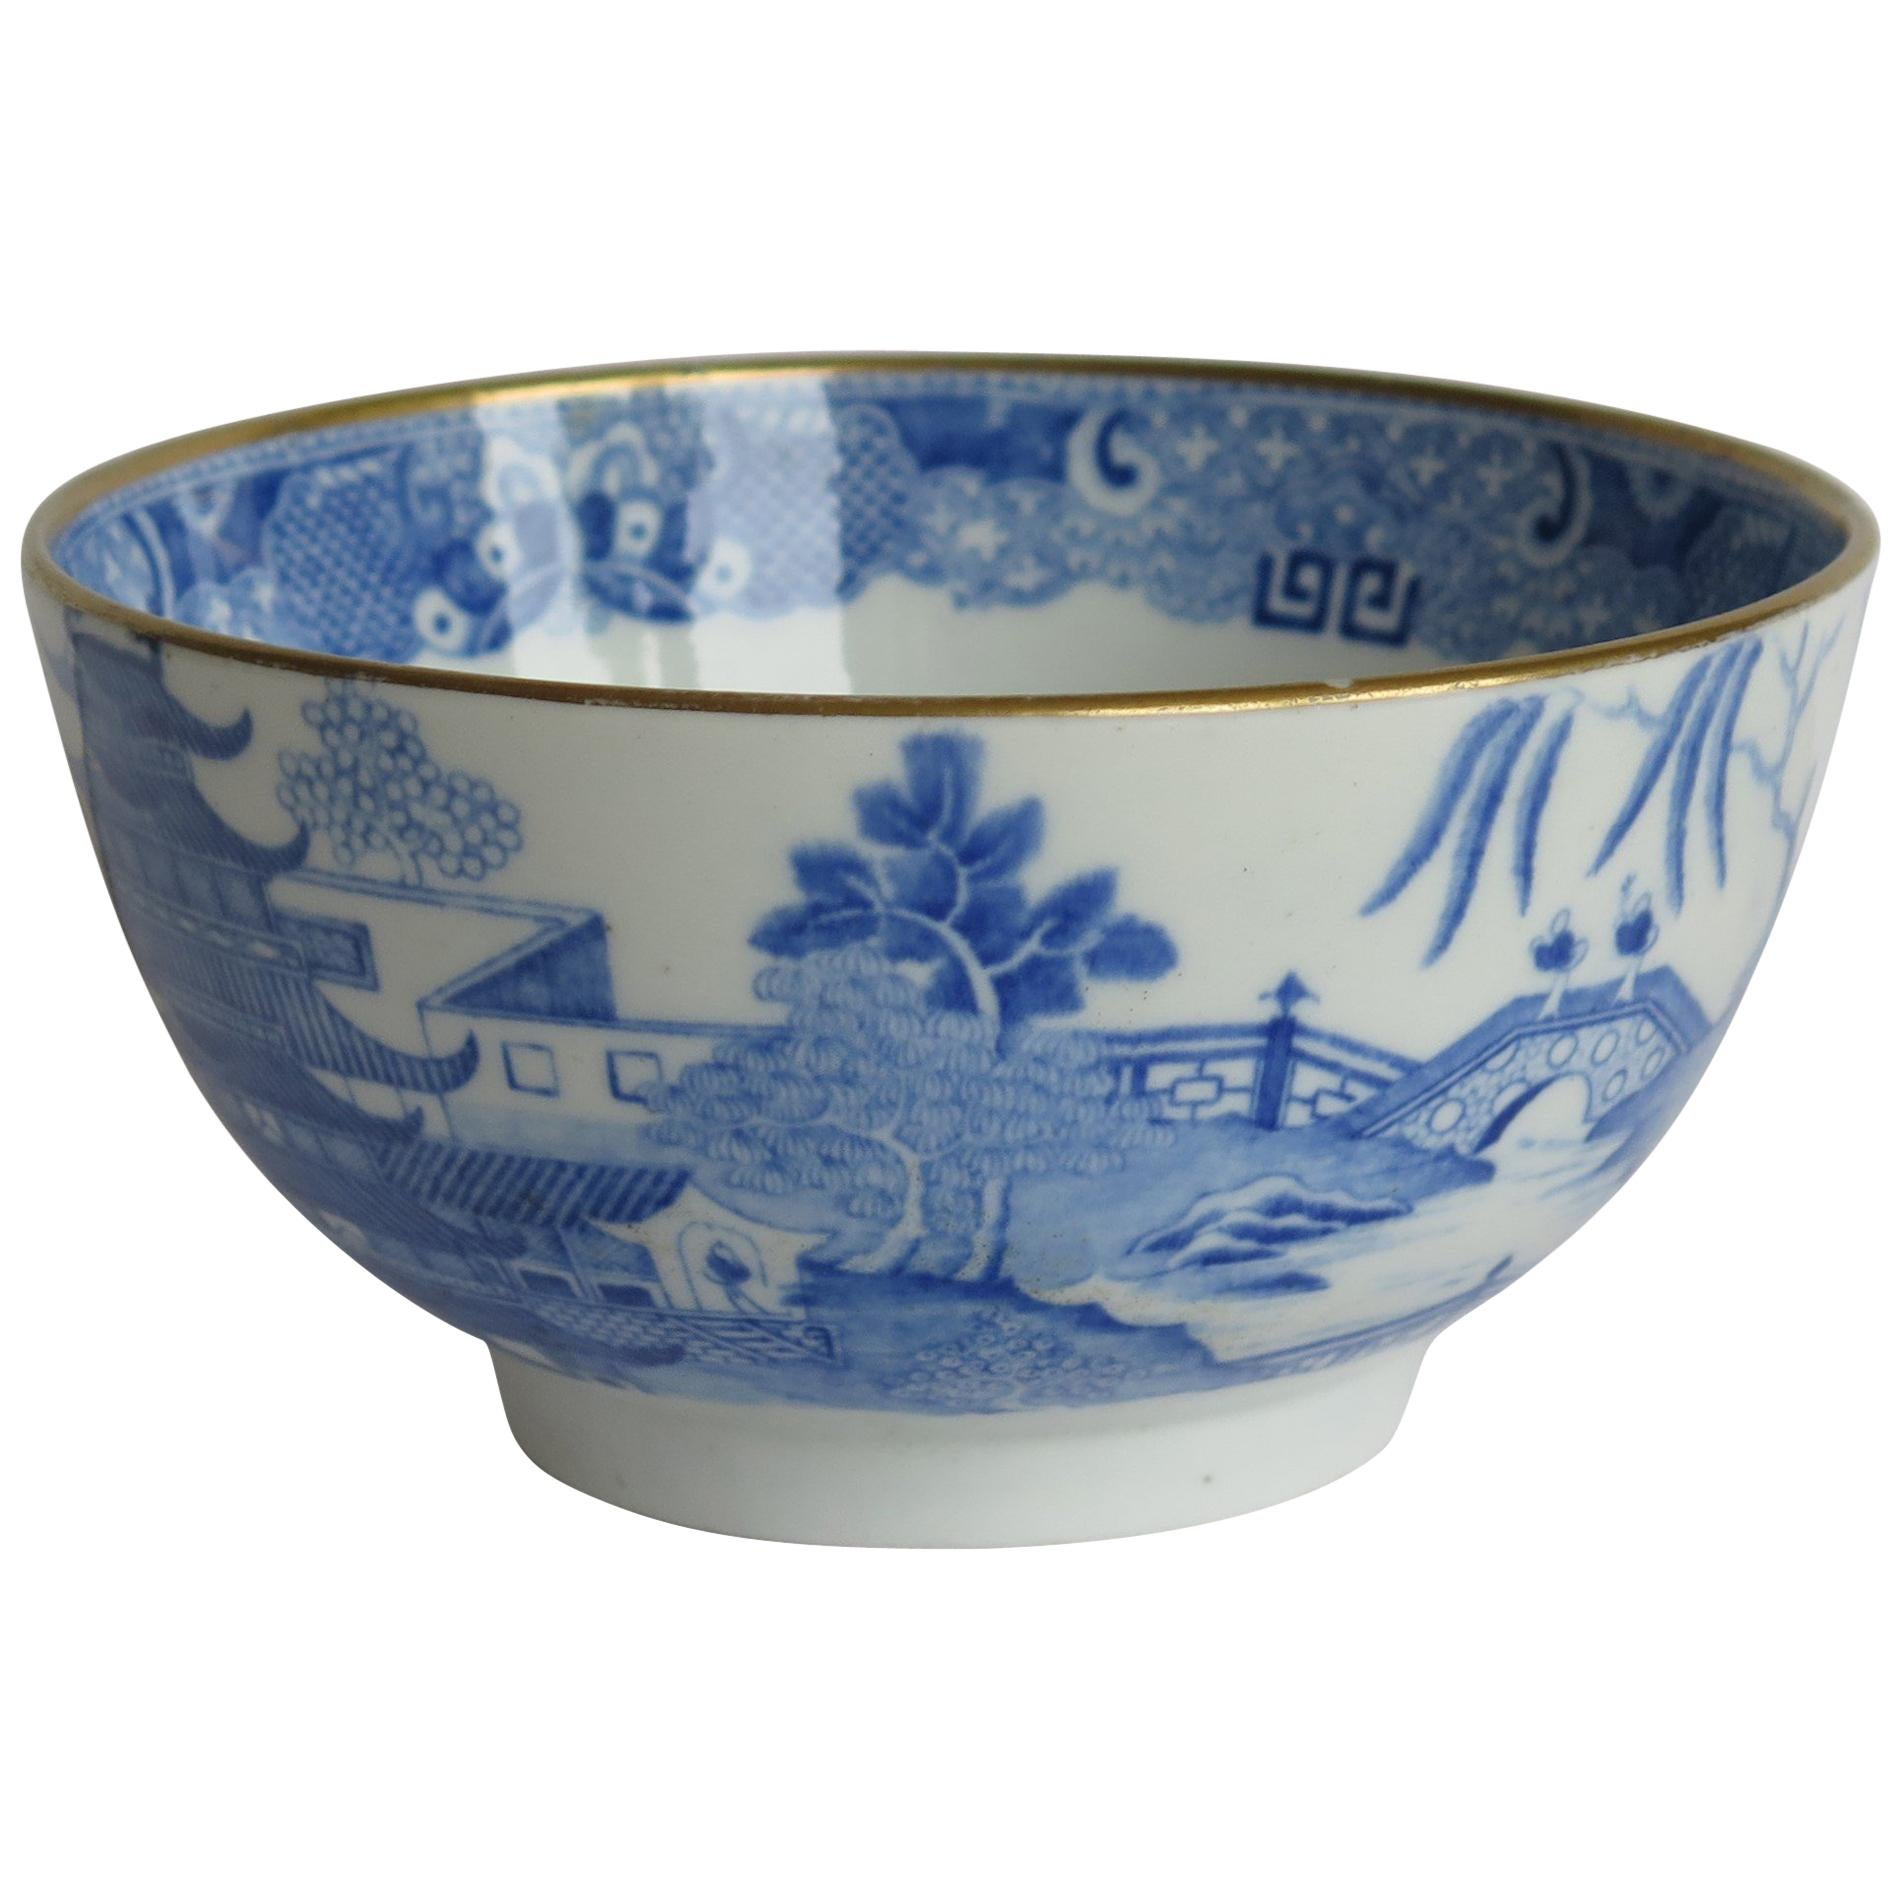 Miles Mason Porcelain Bowl Blue and White Broseley Pattern, English, circa 1805